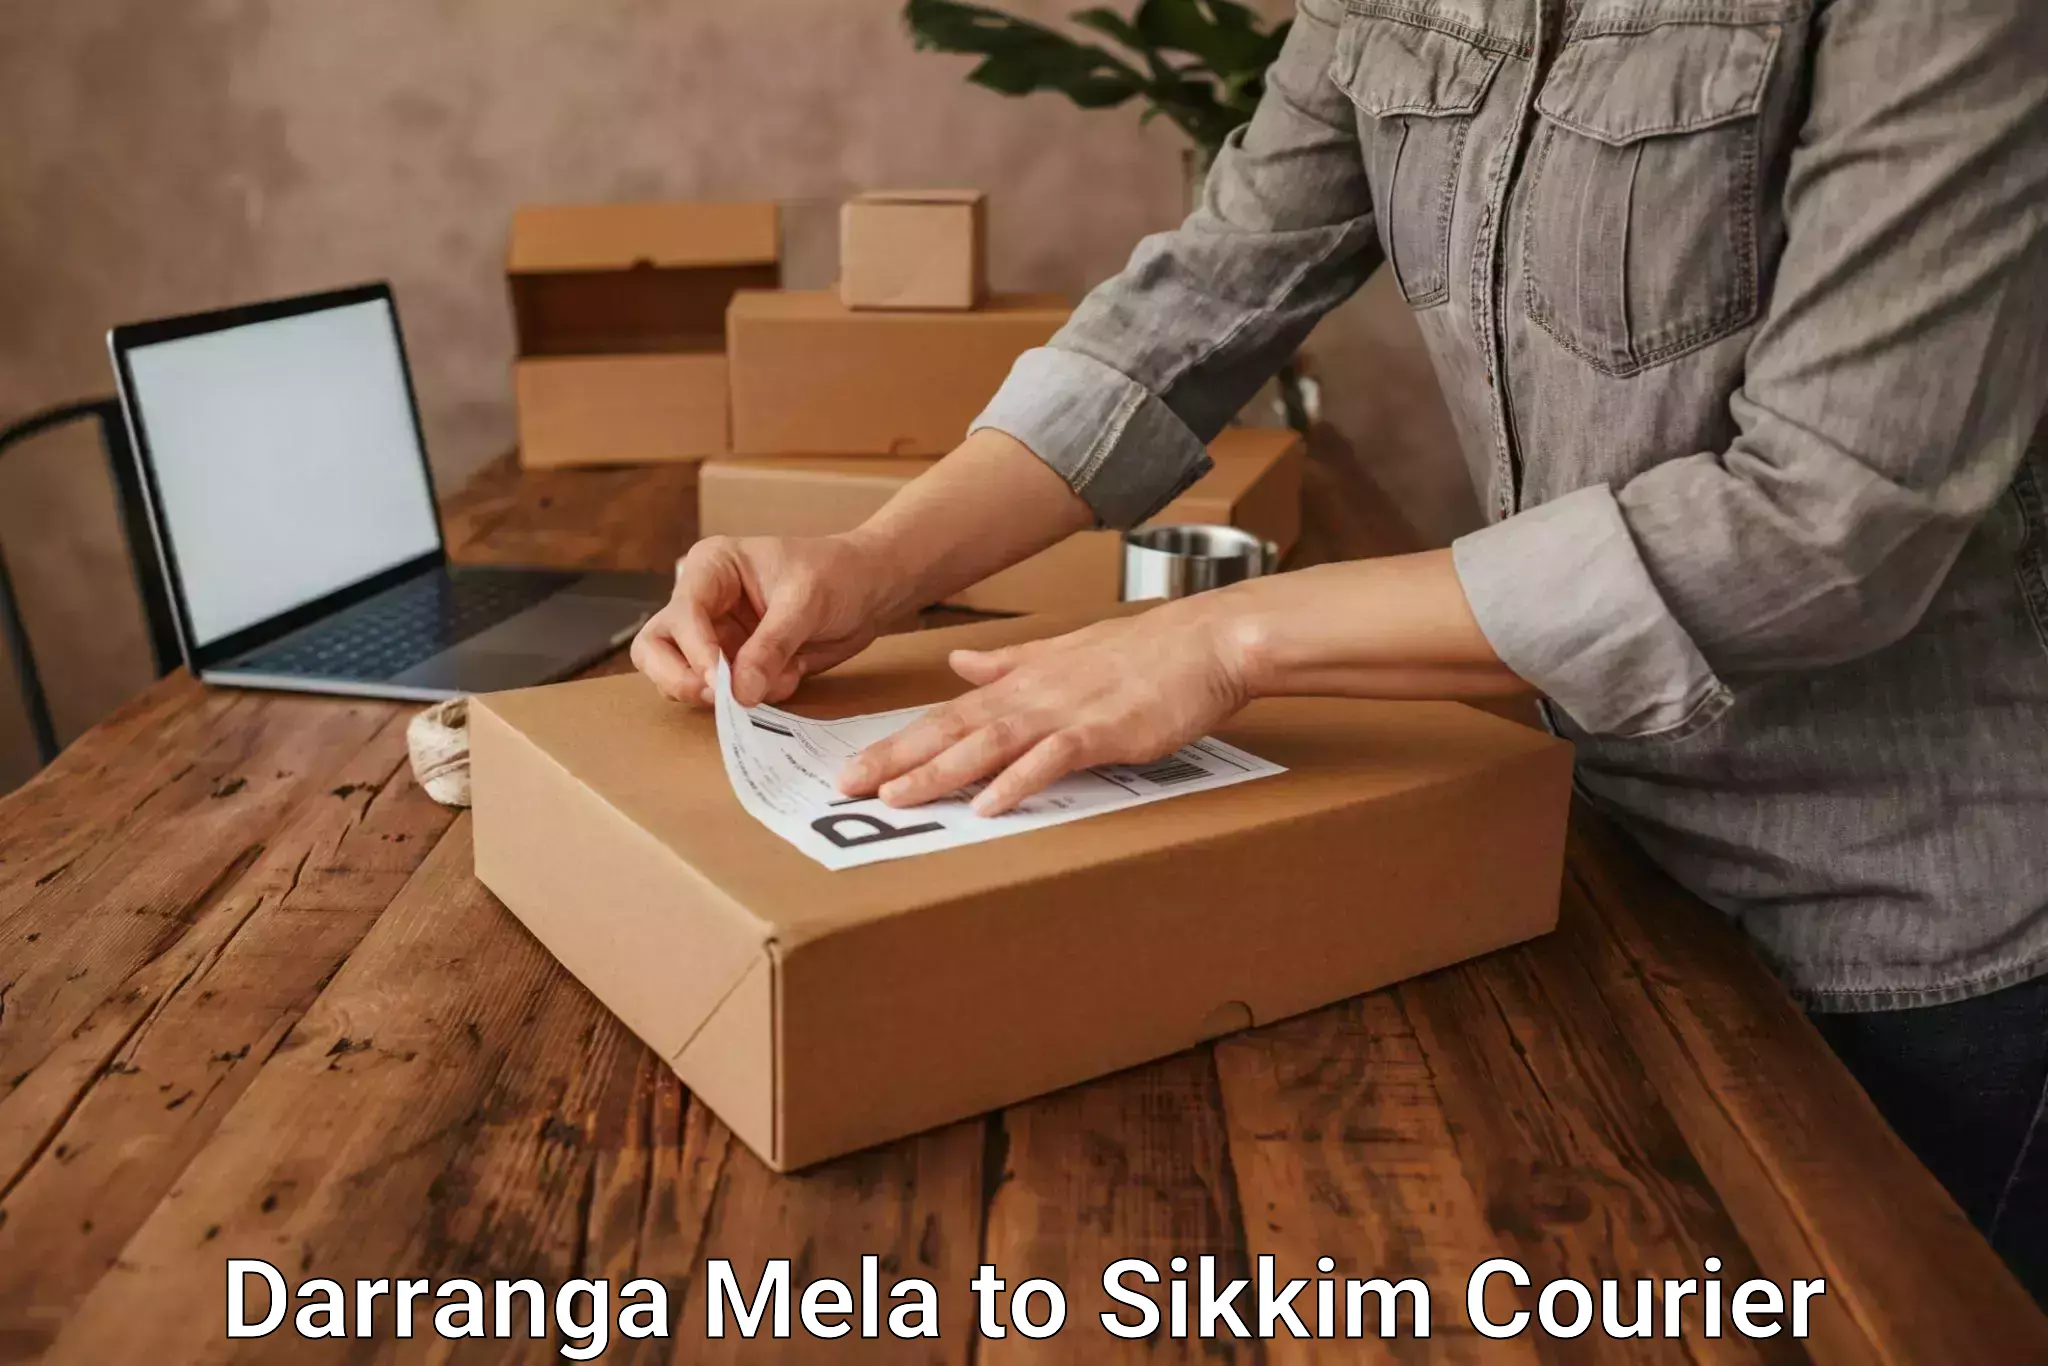 Bulk courier orders Darranga Mela to Ravangla